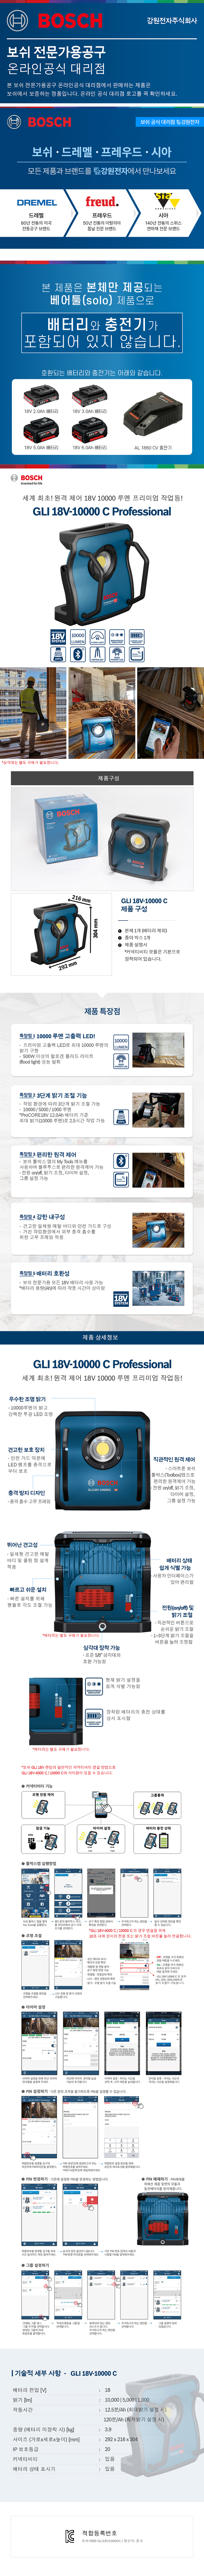 GLI_18V-10000_C_solo_01.jpg